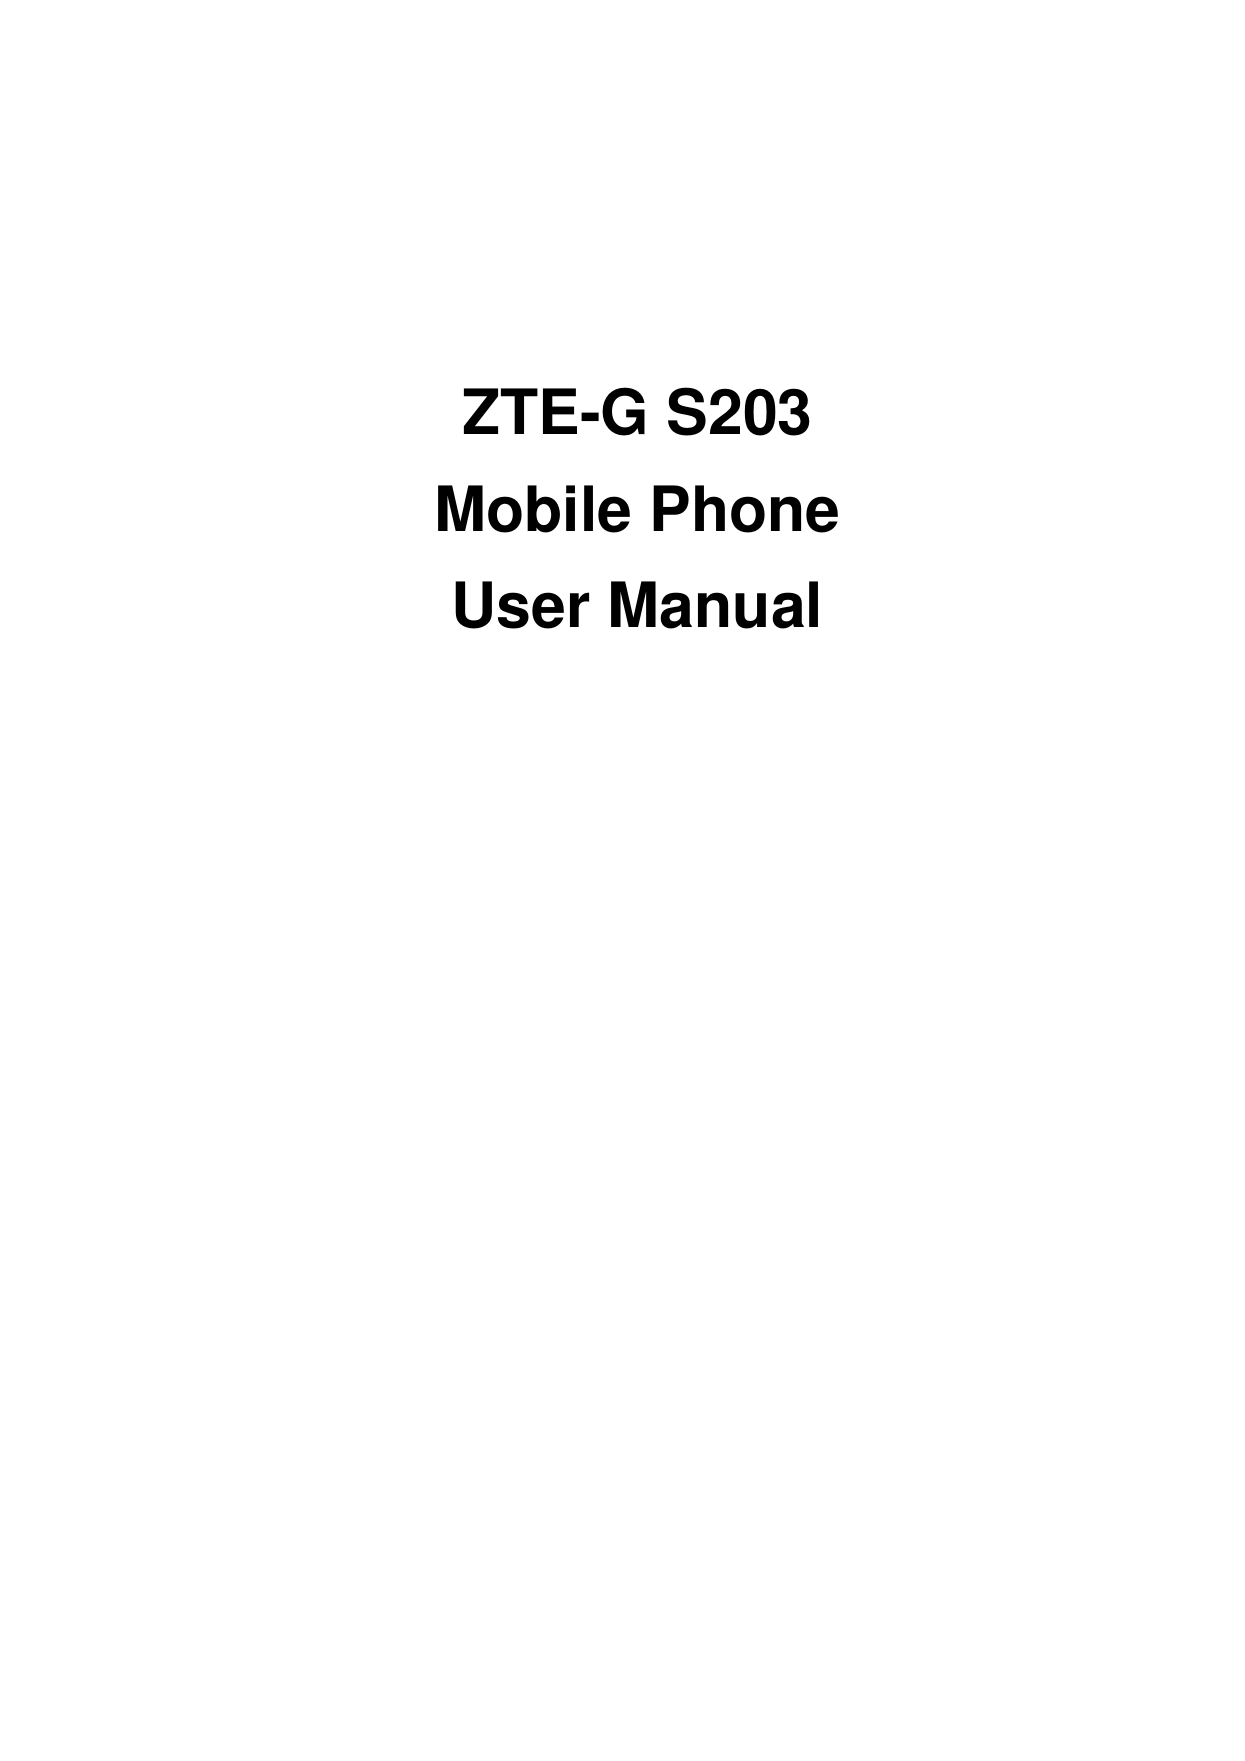   ZTE-G S203 Mobile Phone User Manual          